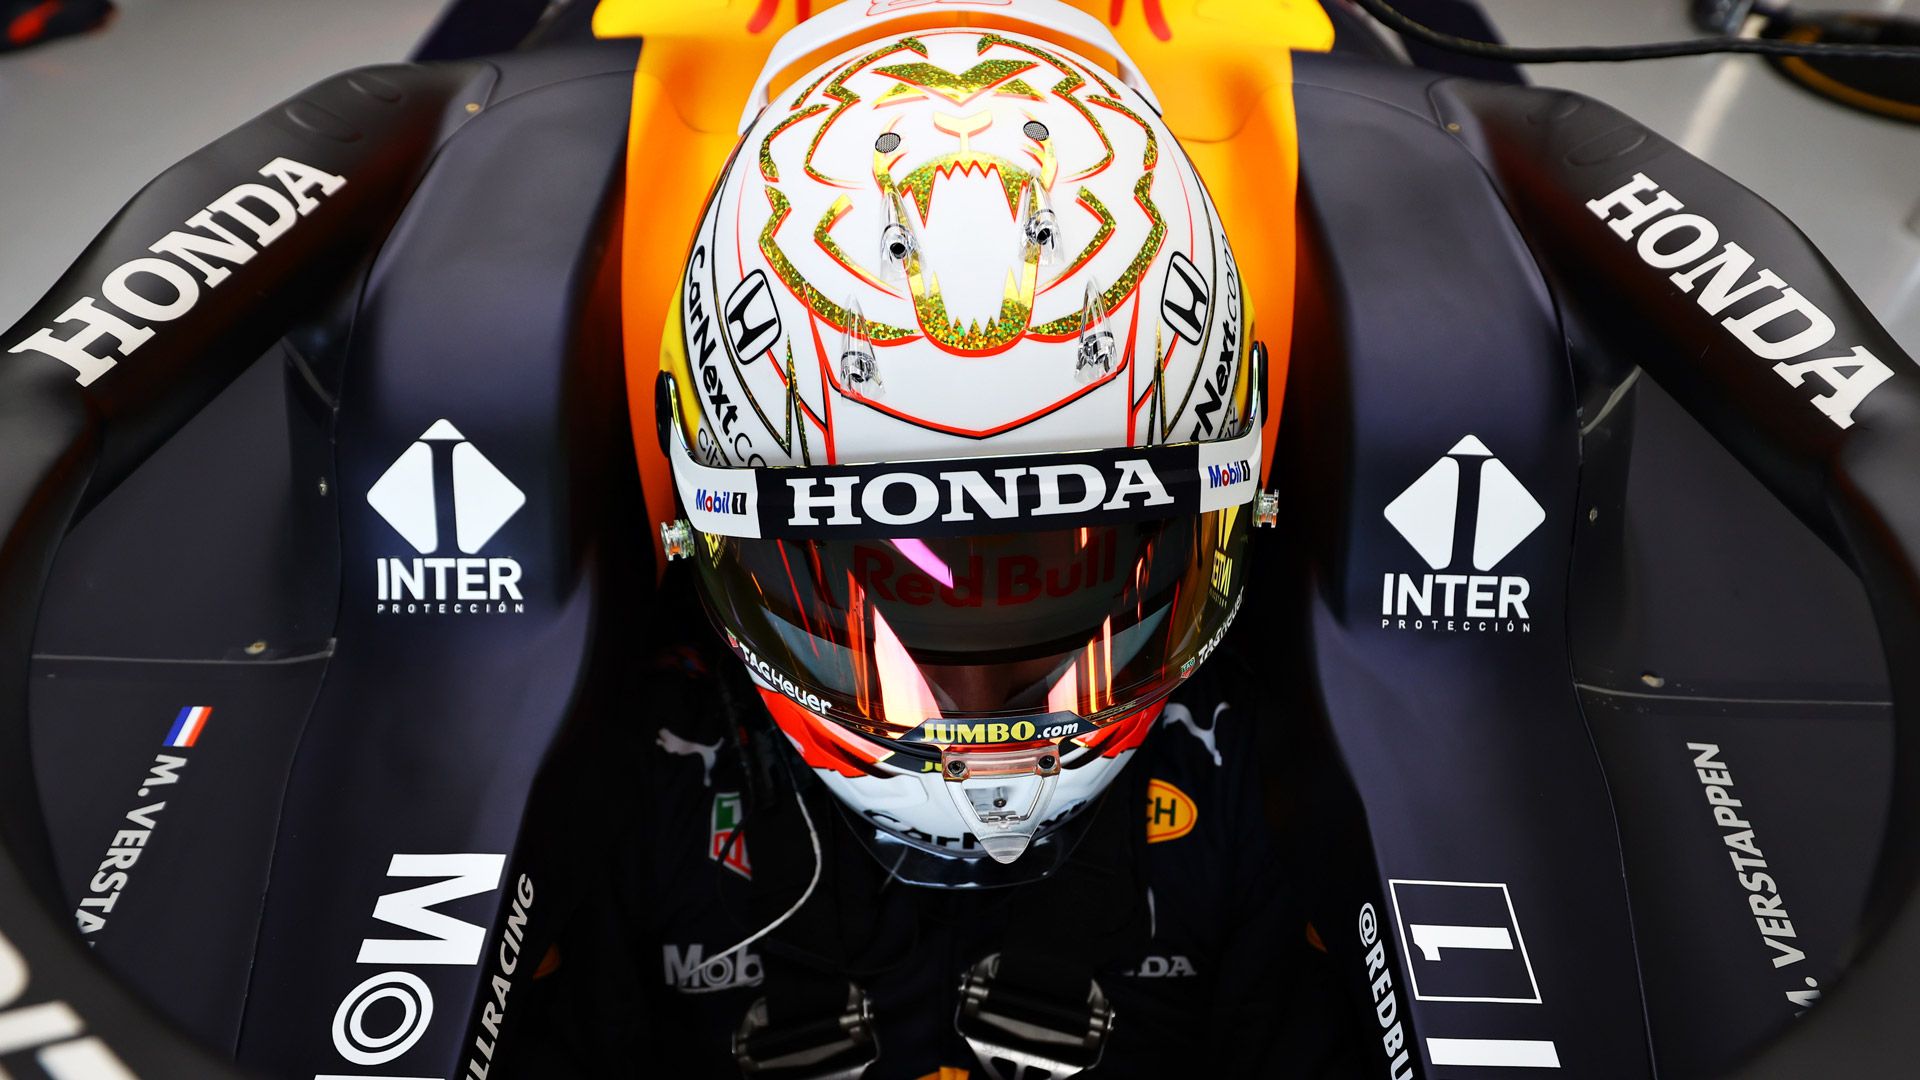 Max Verstappen reveals his 2021 F1 helmet design ahead of RB16B shakedown at Silverstone